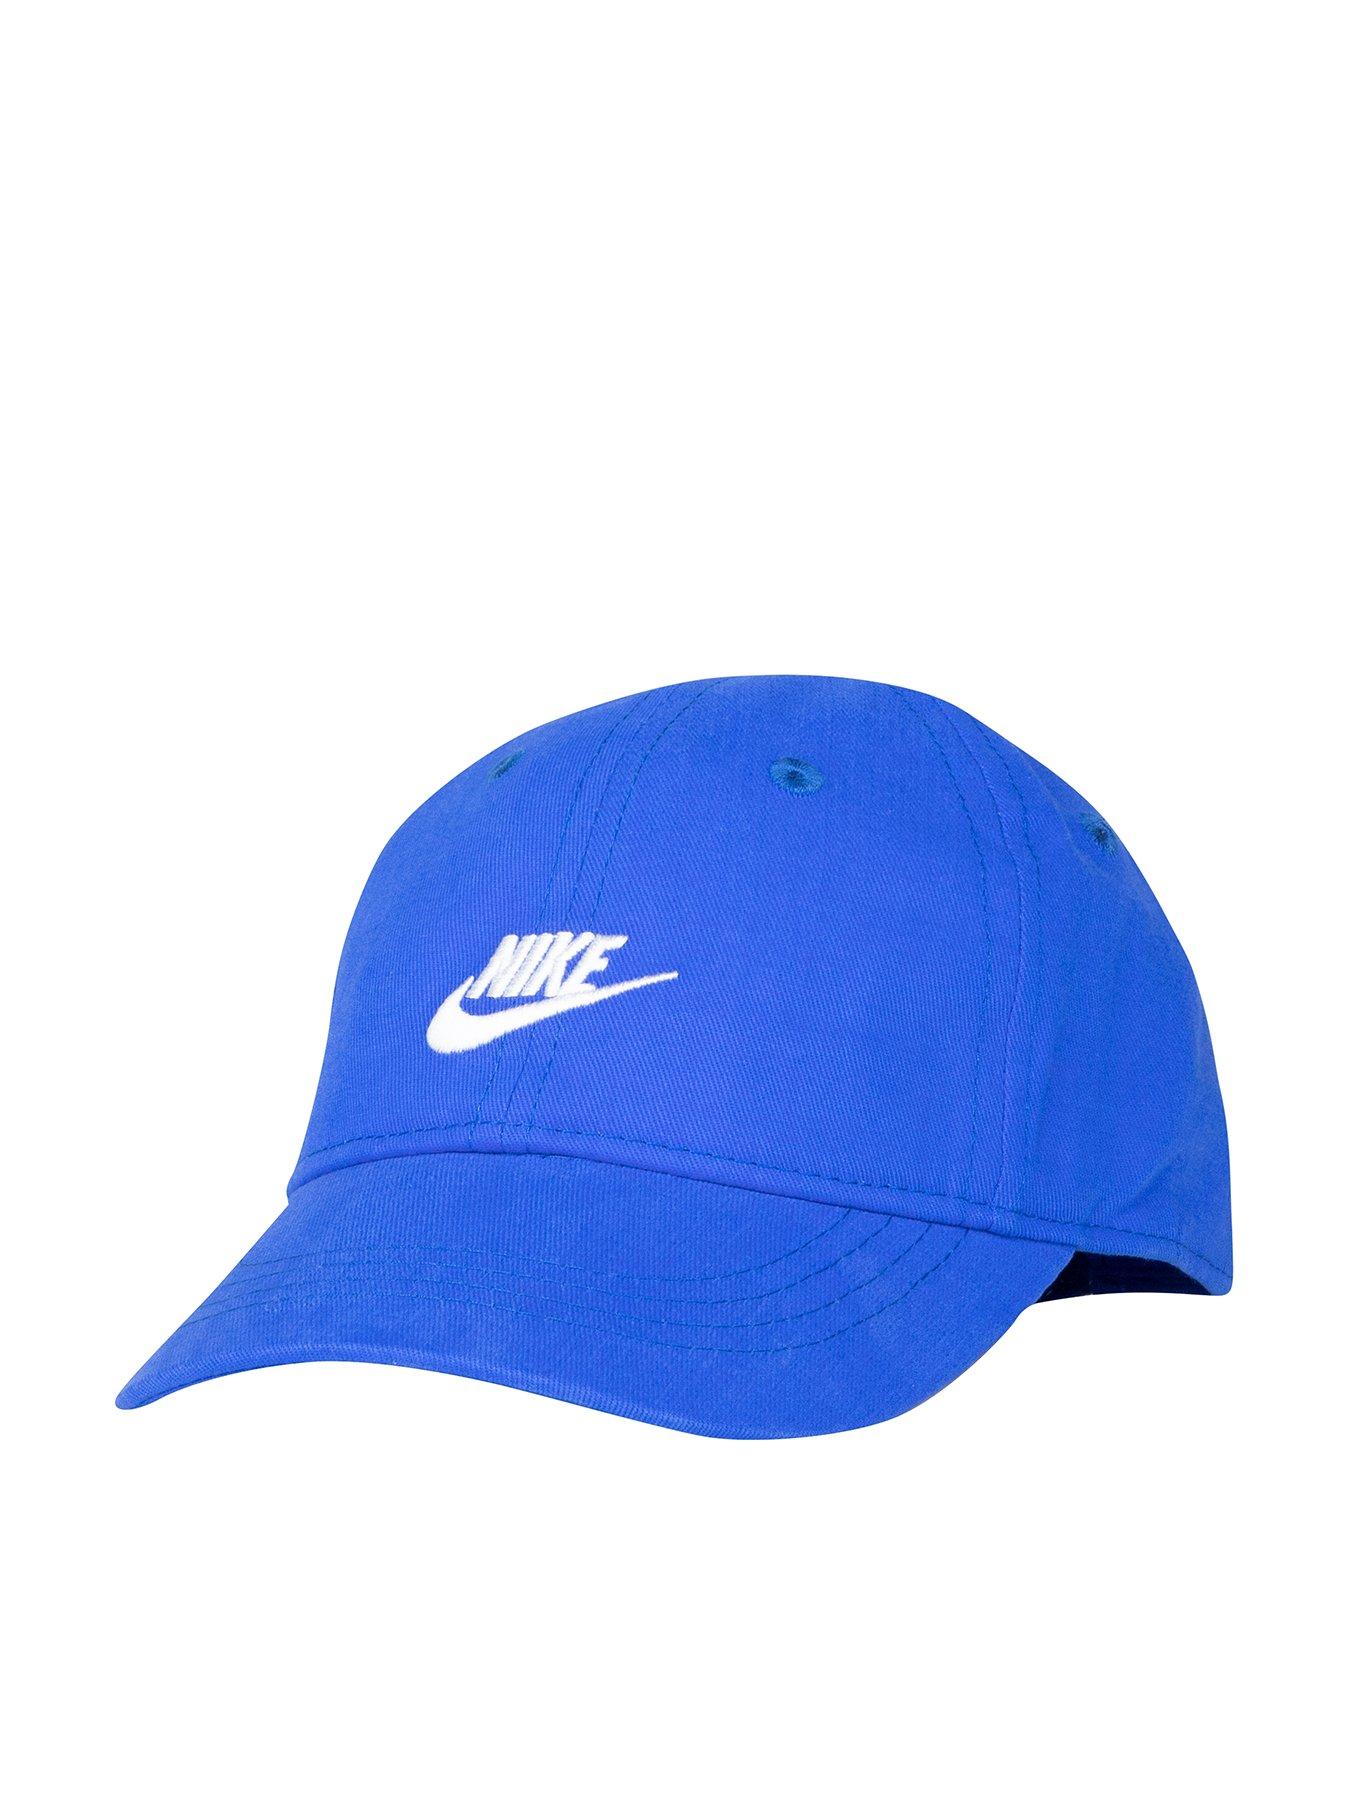 discount 92% Blue/Black Single NoName hat and cap WOMEN FASHION Accessories Hat and cap Blue 